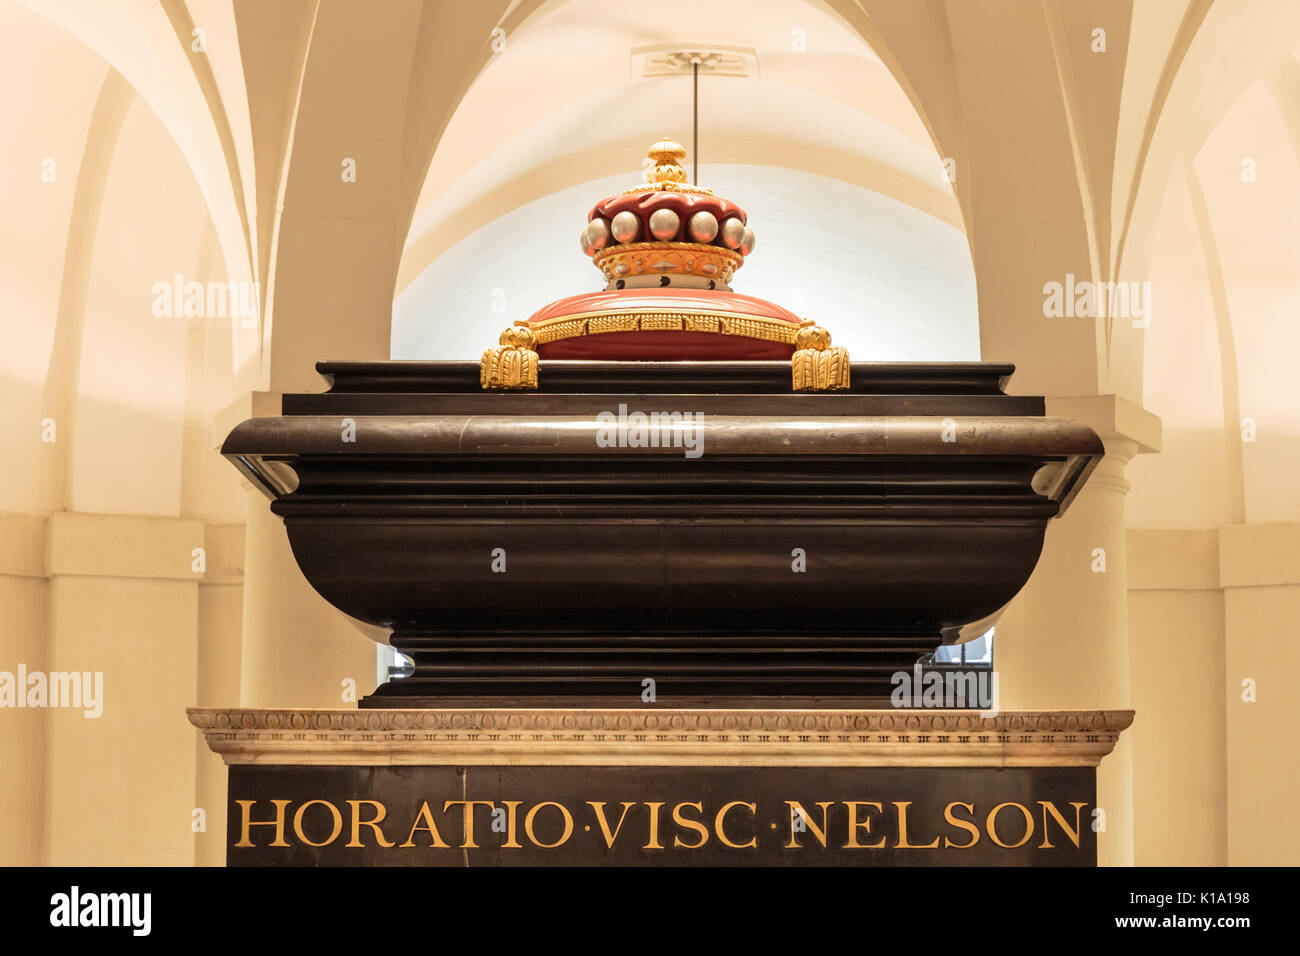 Lord Nelson's Tomb, schwarzer Marmor Sarkophag mit Sarg von Admiral Lord Nelson, Horatio Viscount Nelson, Krypta der St. Paul's Cathedral, London UK Stockfoto